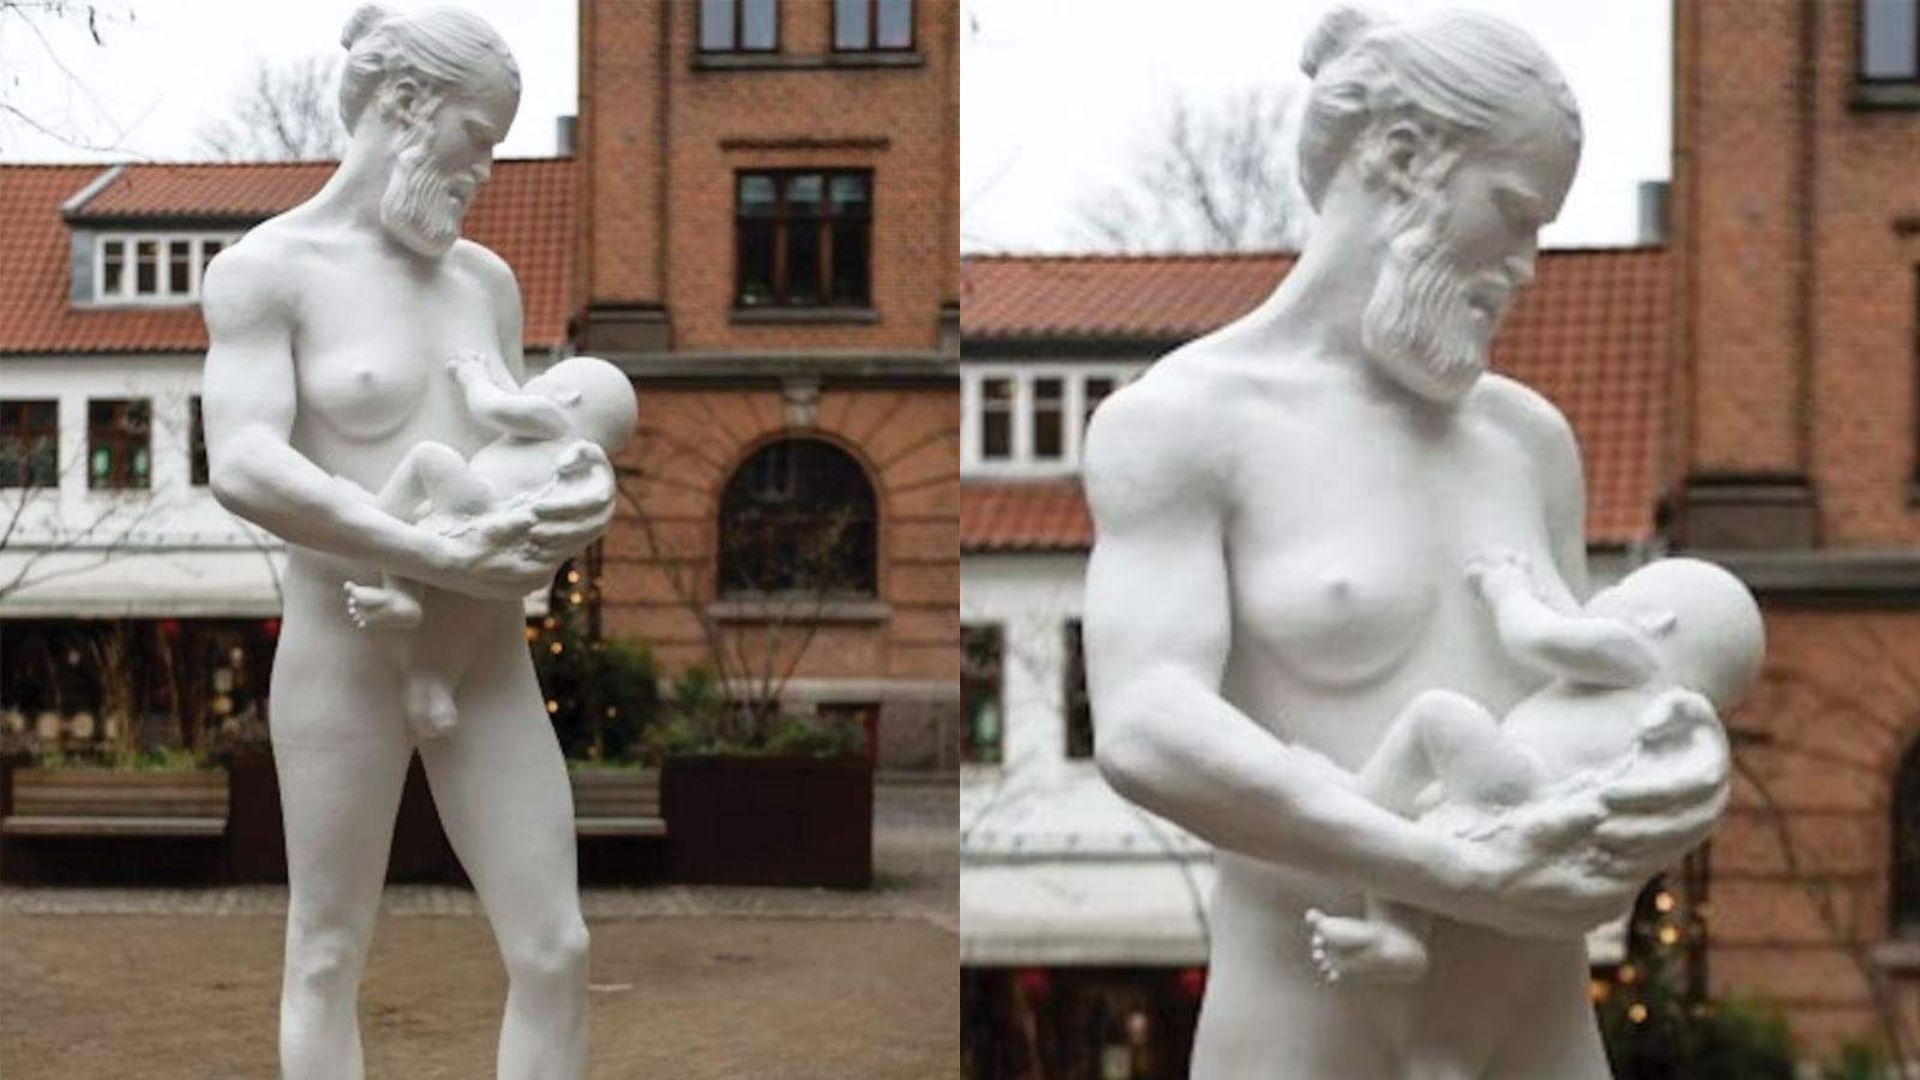 DENMARK: Statue of Man Breastfeeding At Former Women's Museum Prompts Criticism - Reduxx